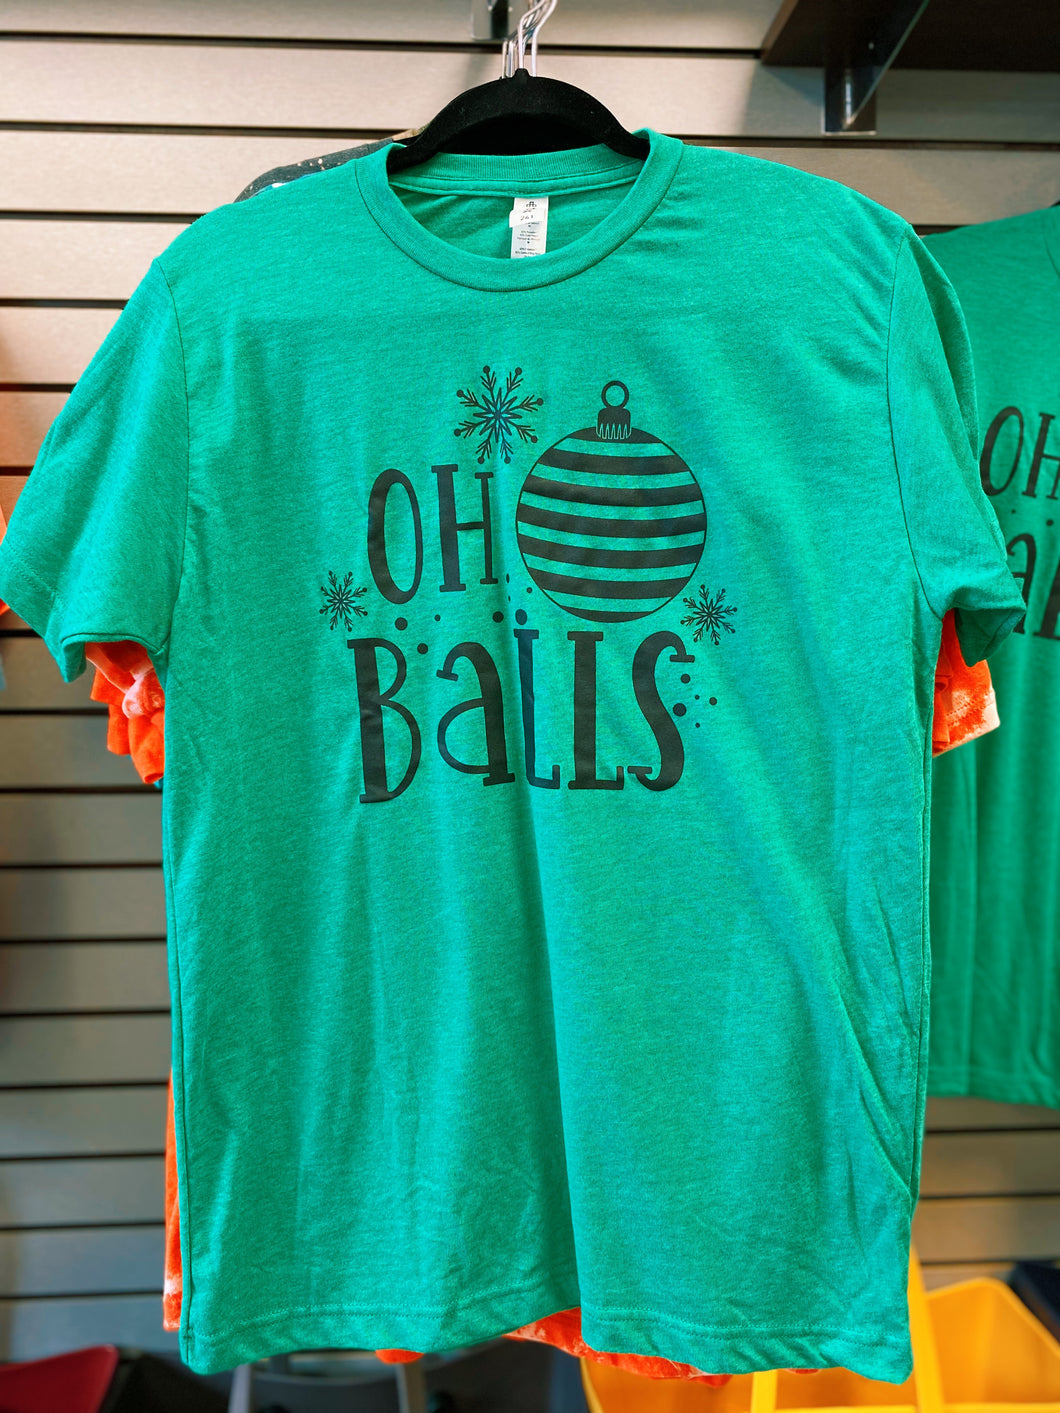 Oh Balls T-shirt